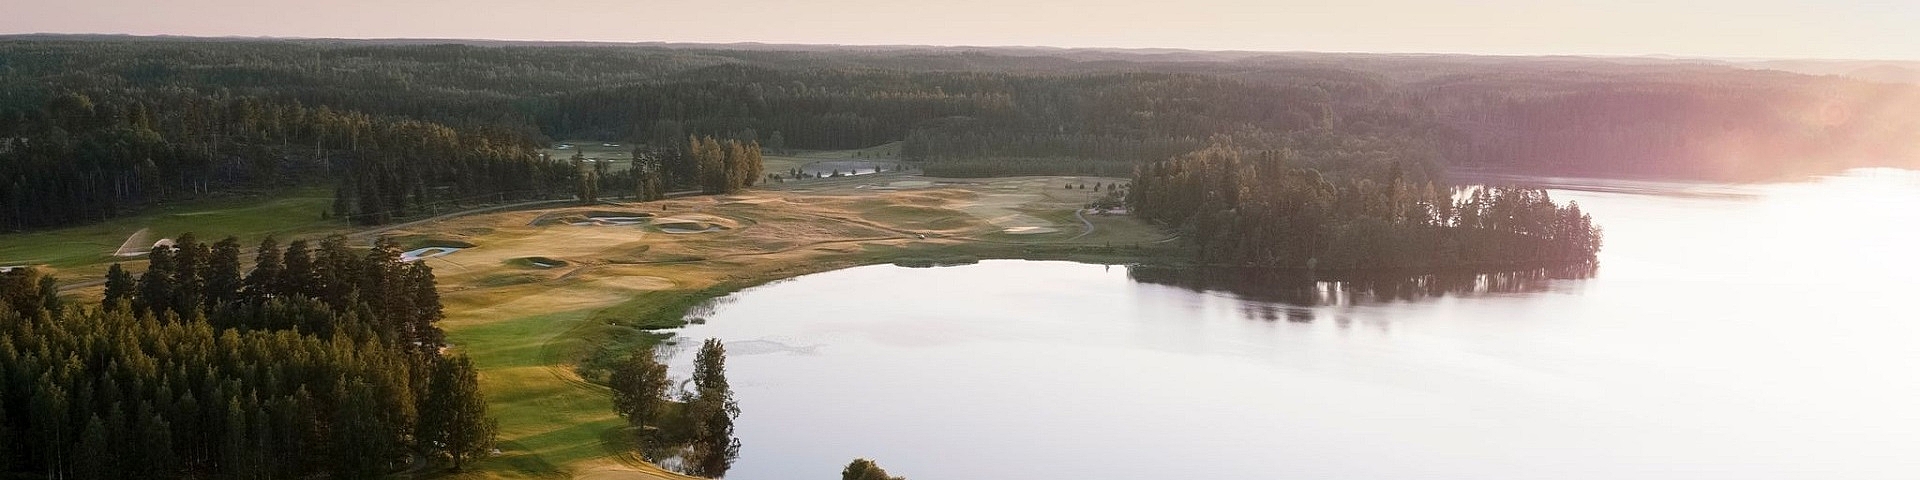 Kytäjä Golf | Golf i Finland